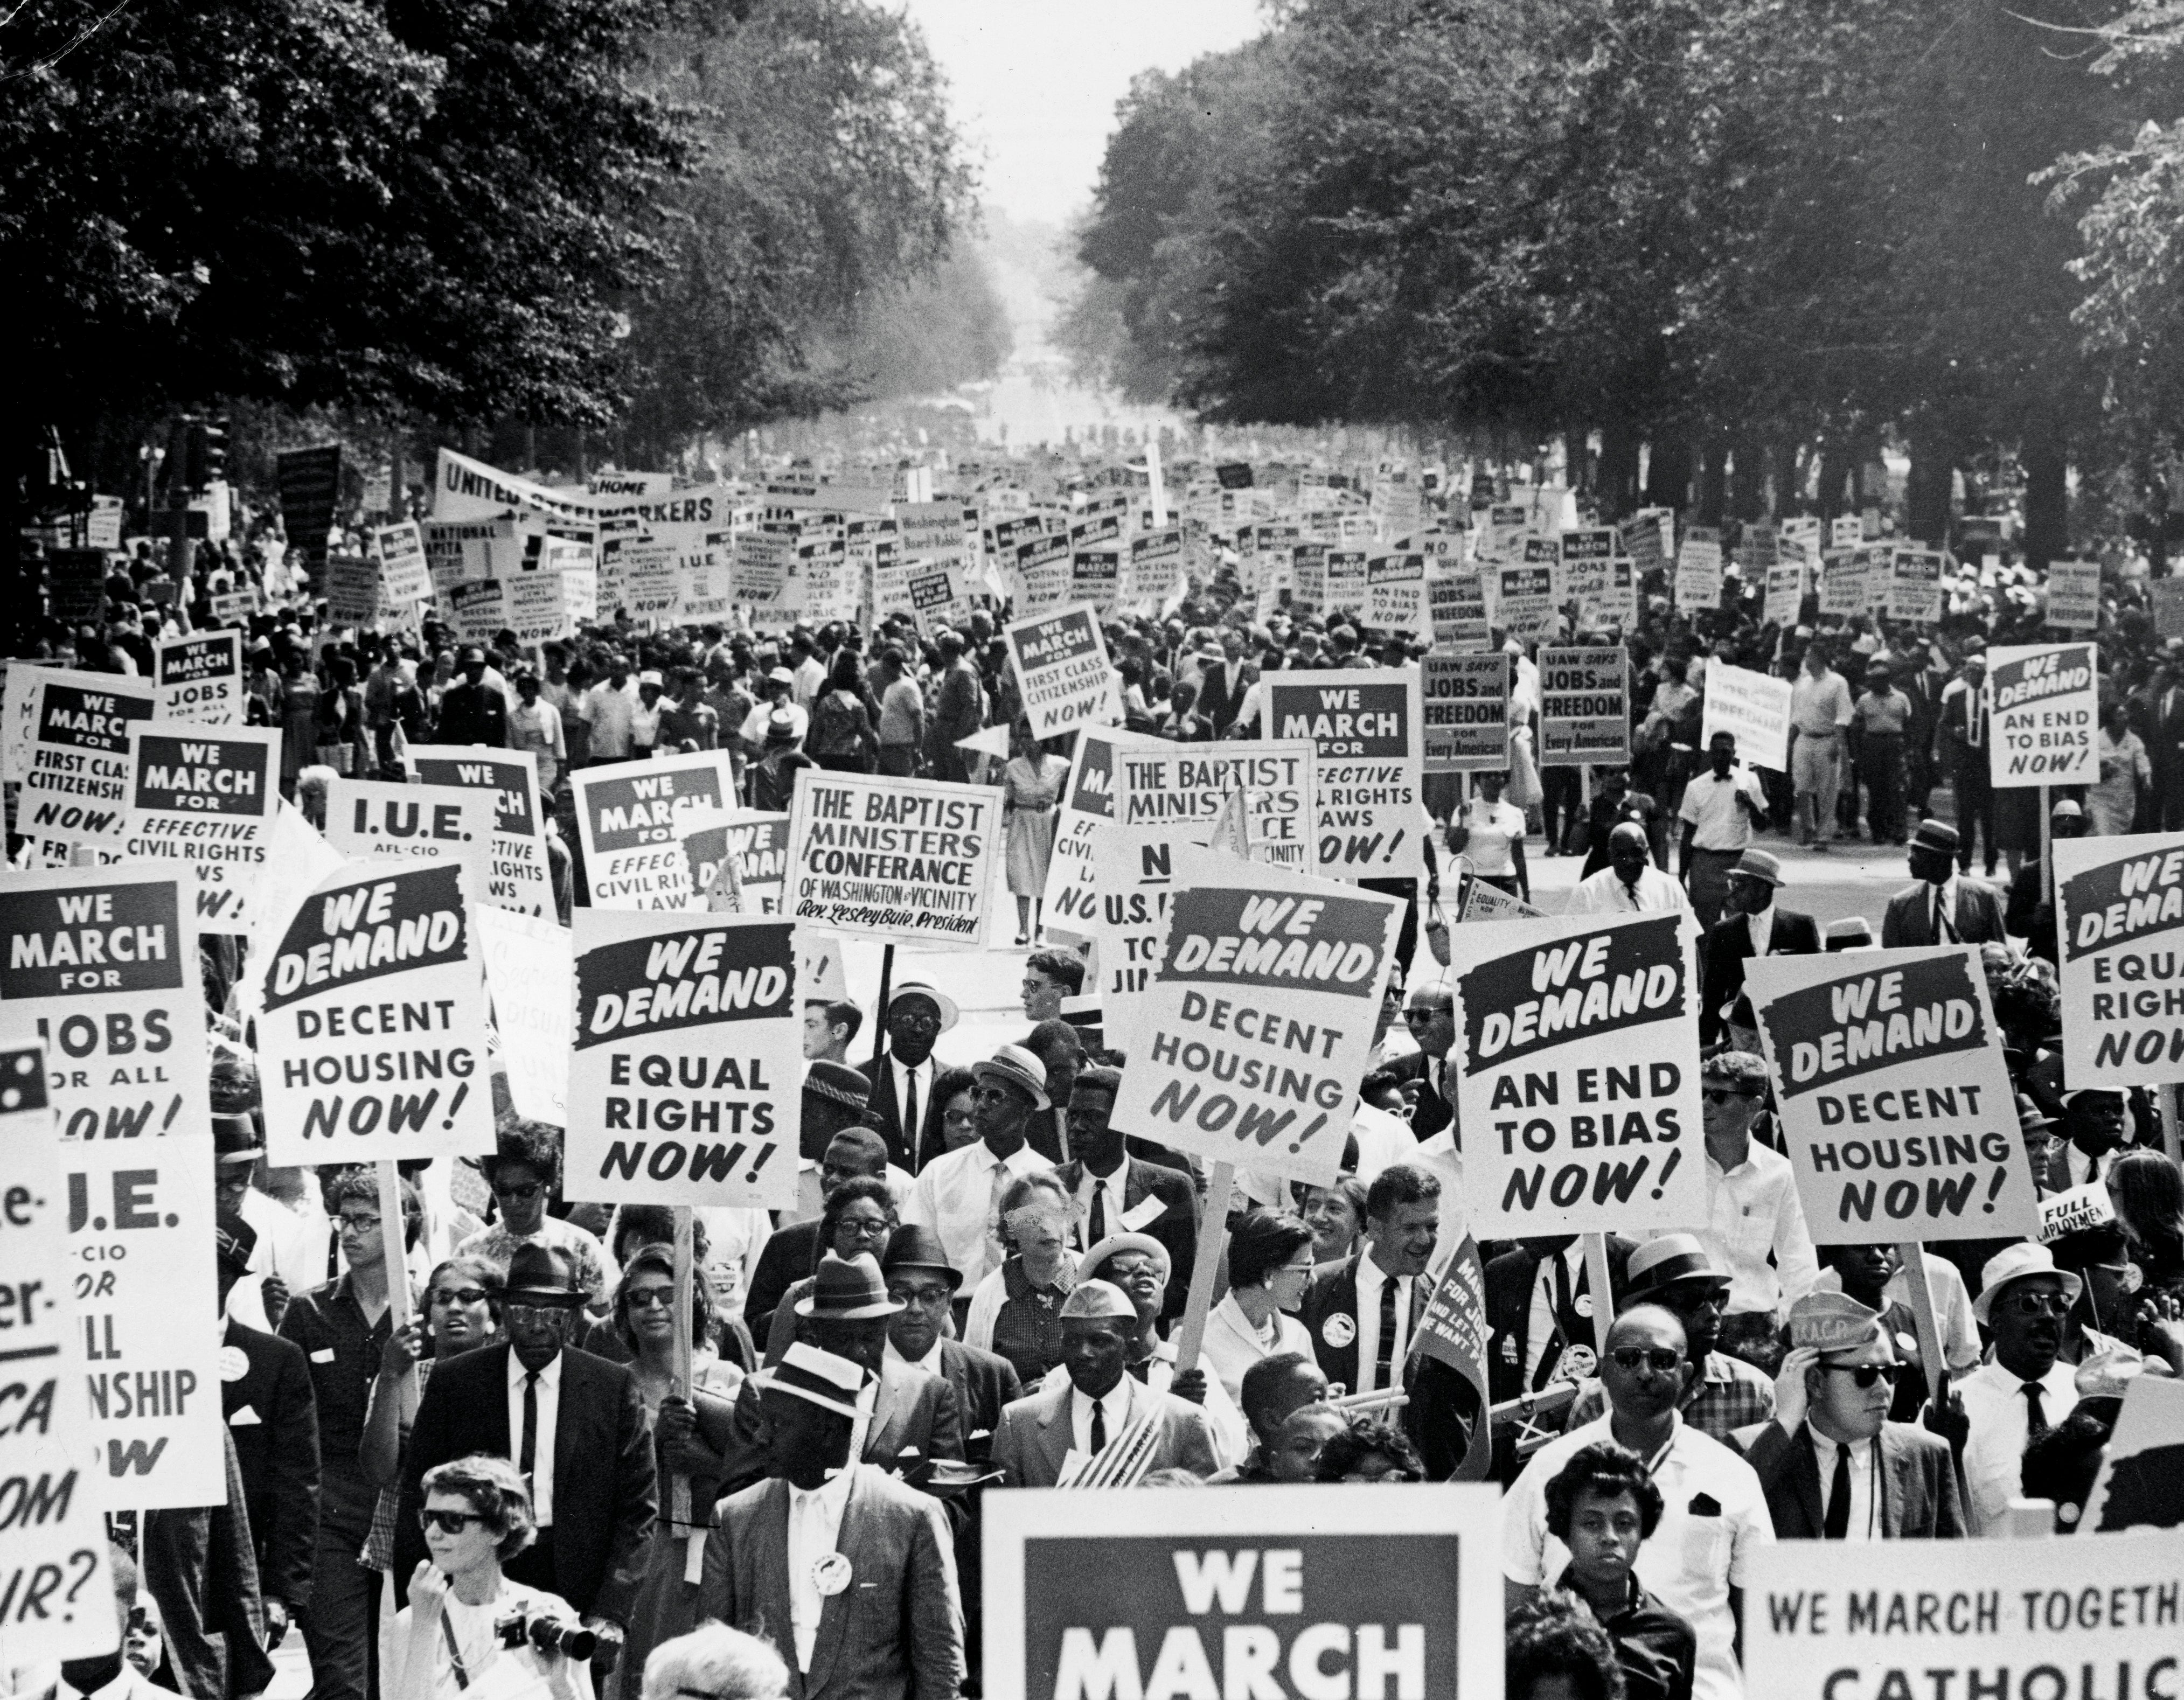 March on Washington on August 28, 1963